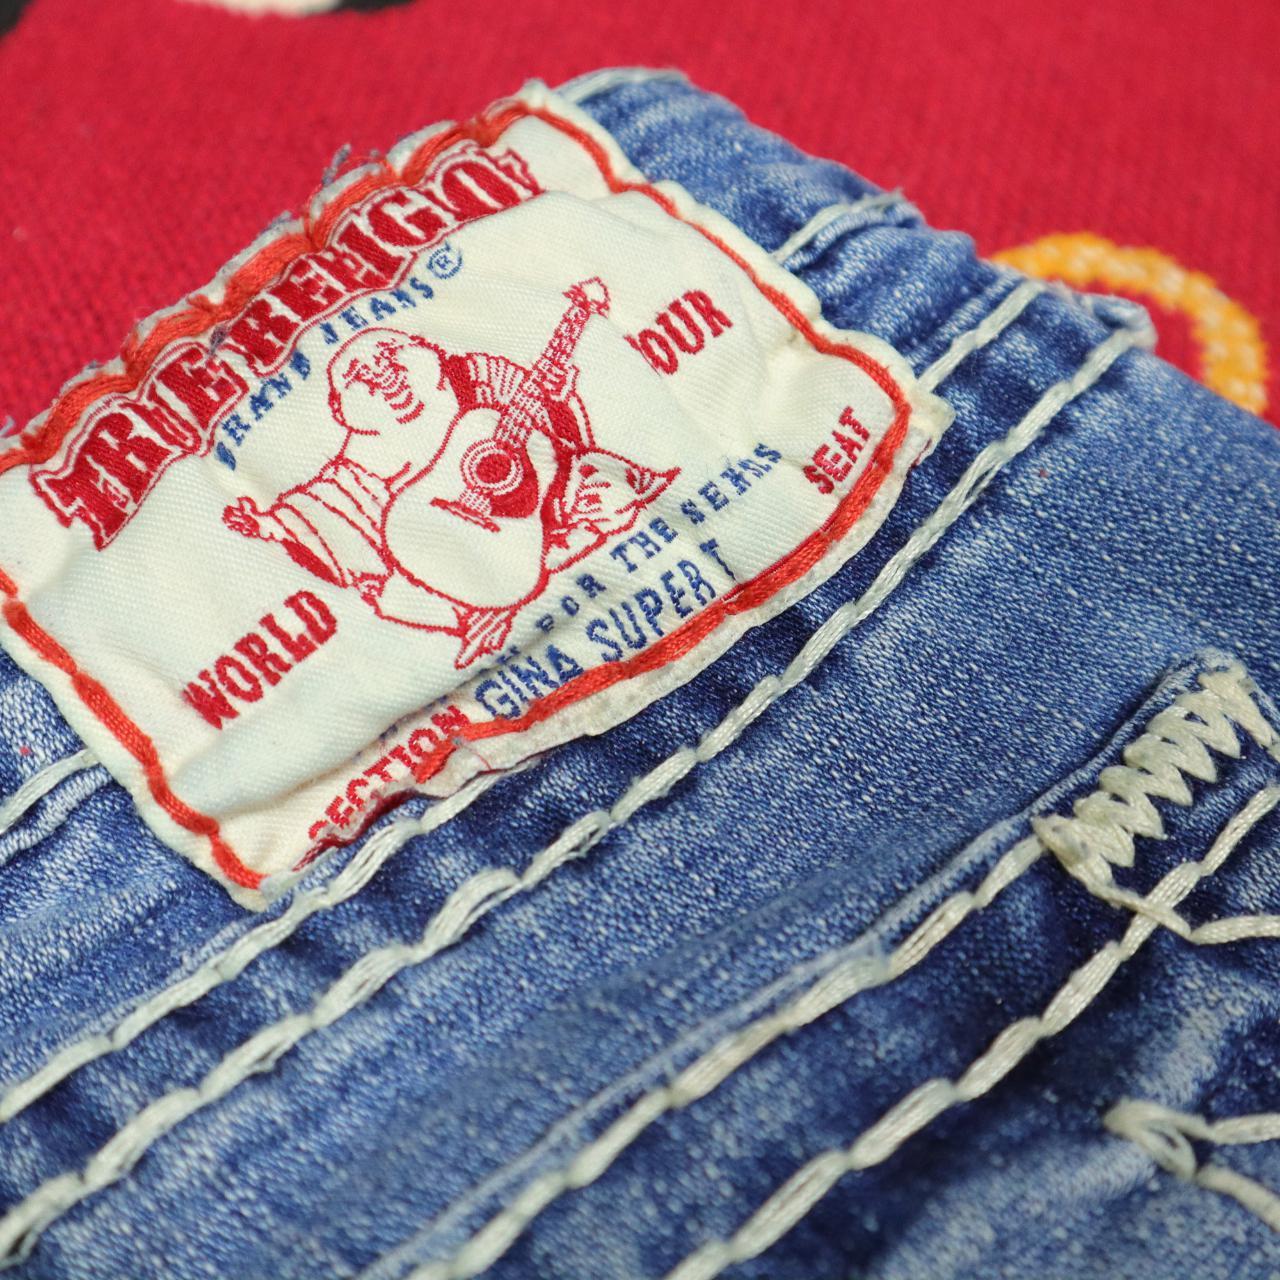 Product Image 2 - True Religion Jeans

Size 32x32

Waist: 32"
Length: